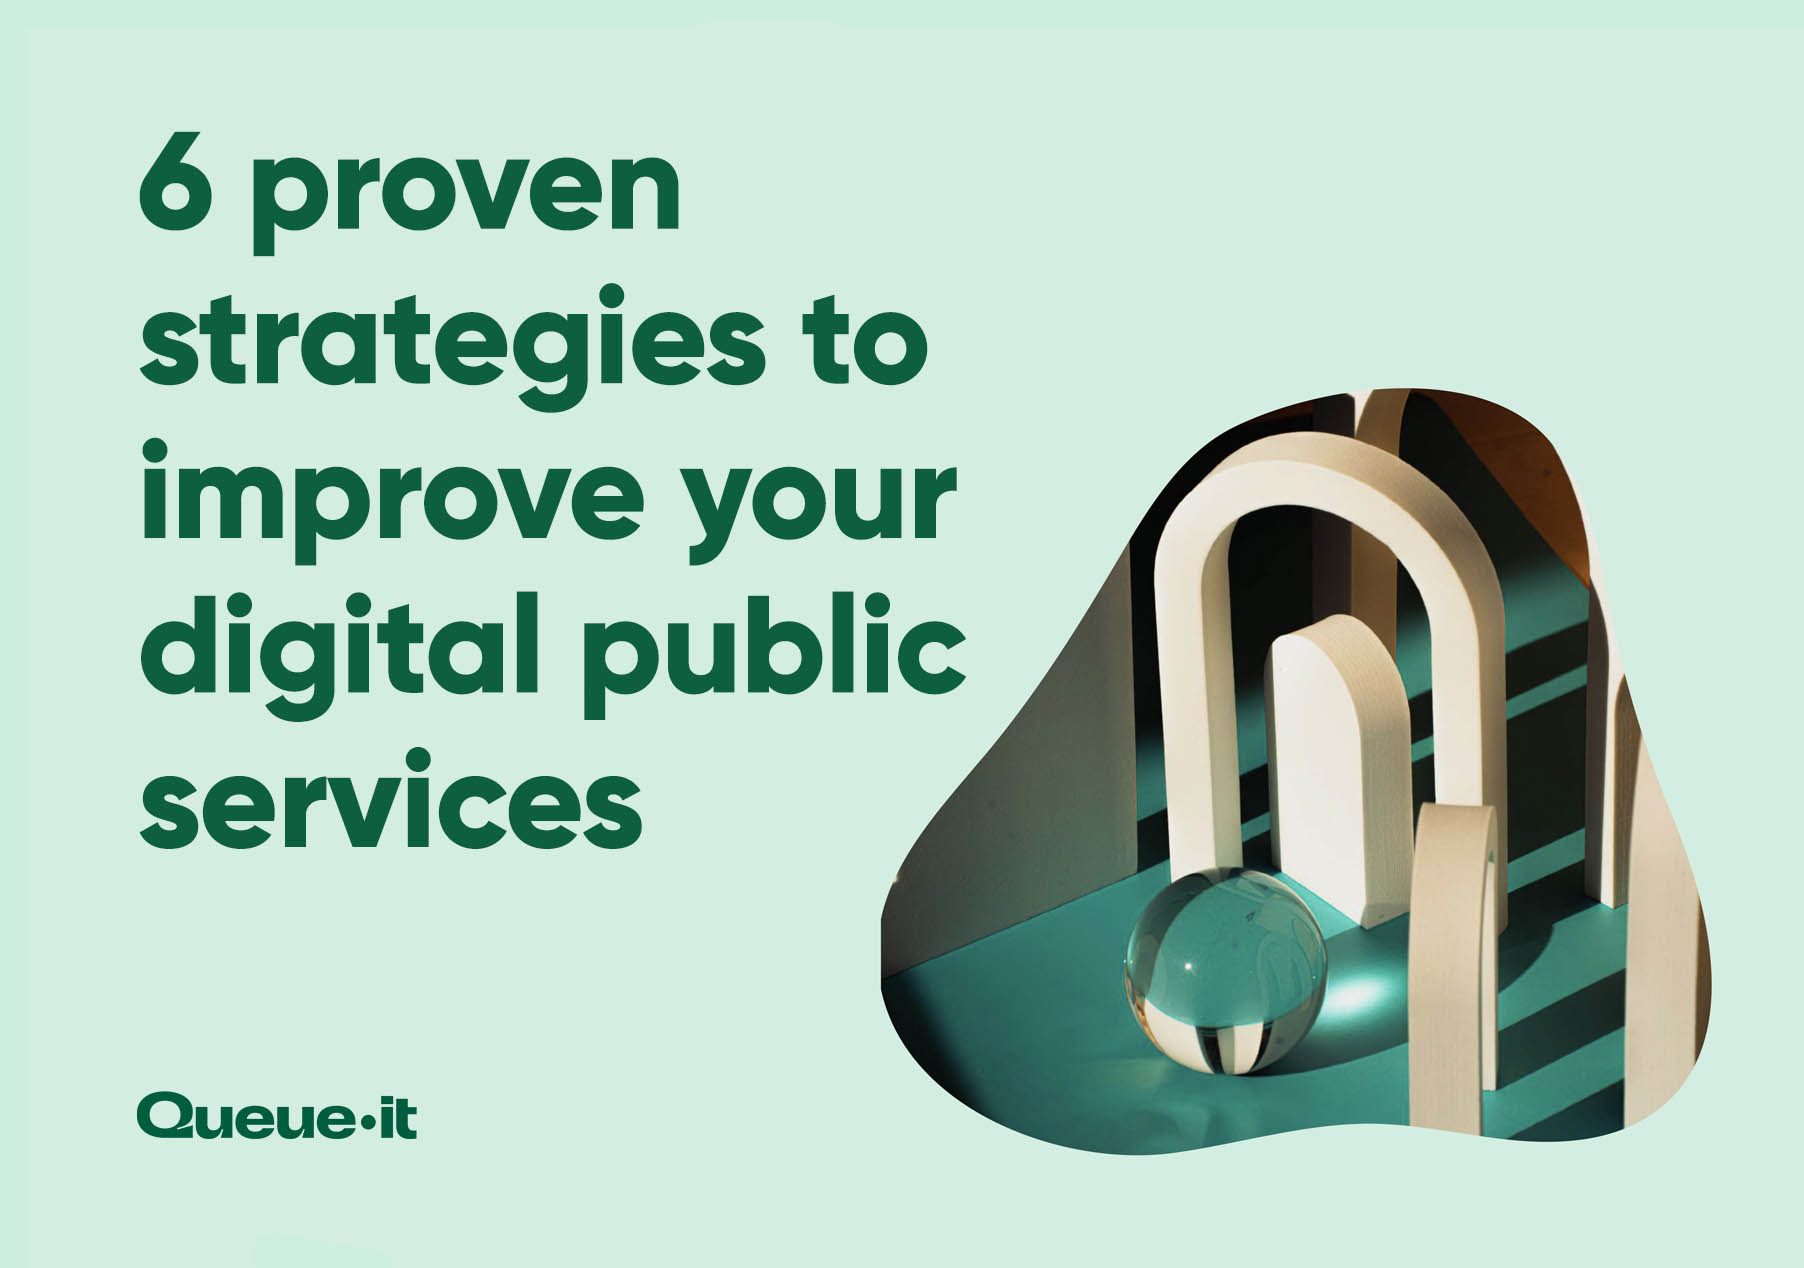 6 proven strategies to improve digital public services